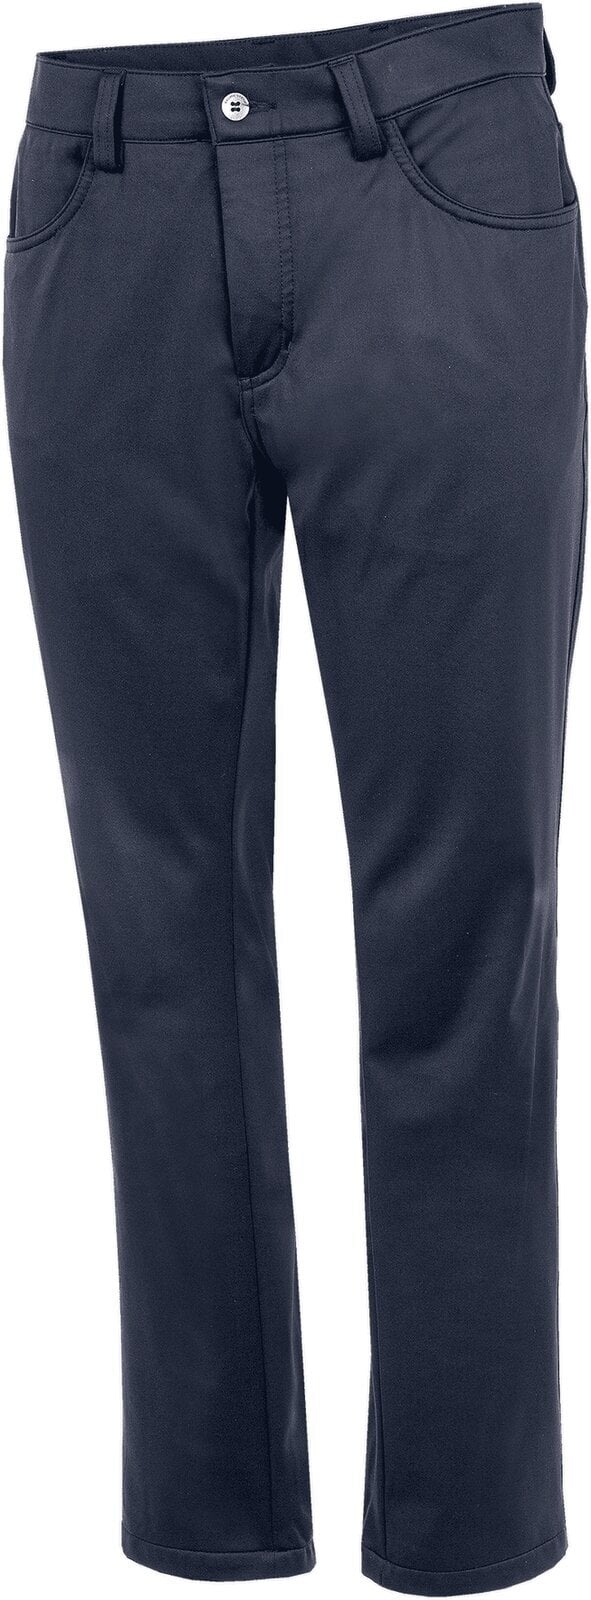 Pantaloni Galvin Green Lane MensWindproof And Water Repellent Pants Navy 38/32